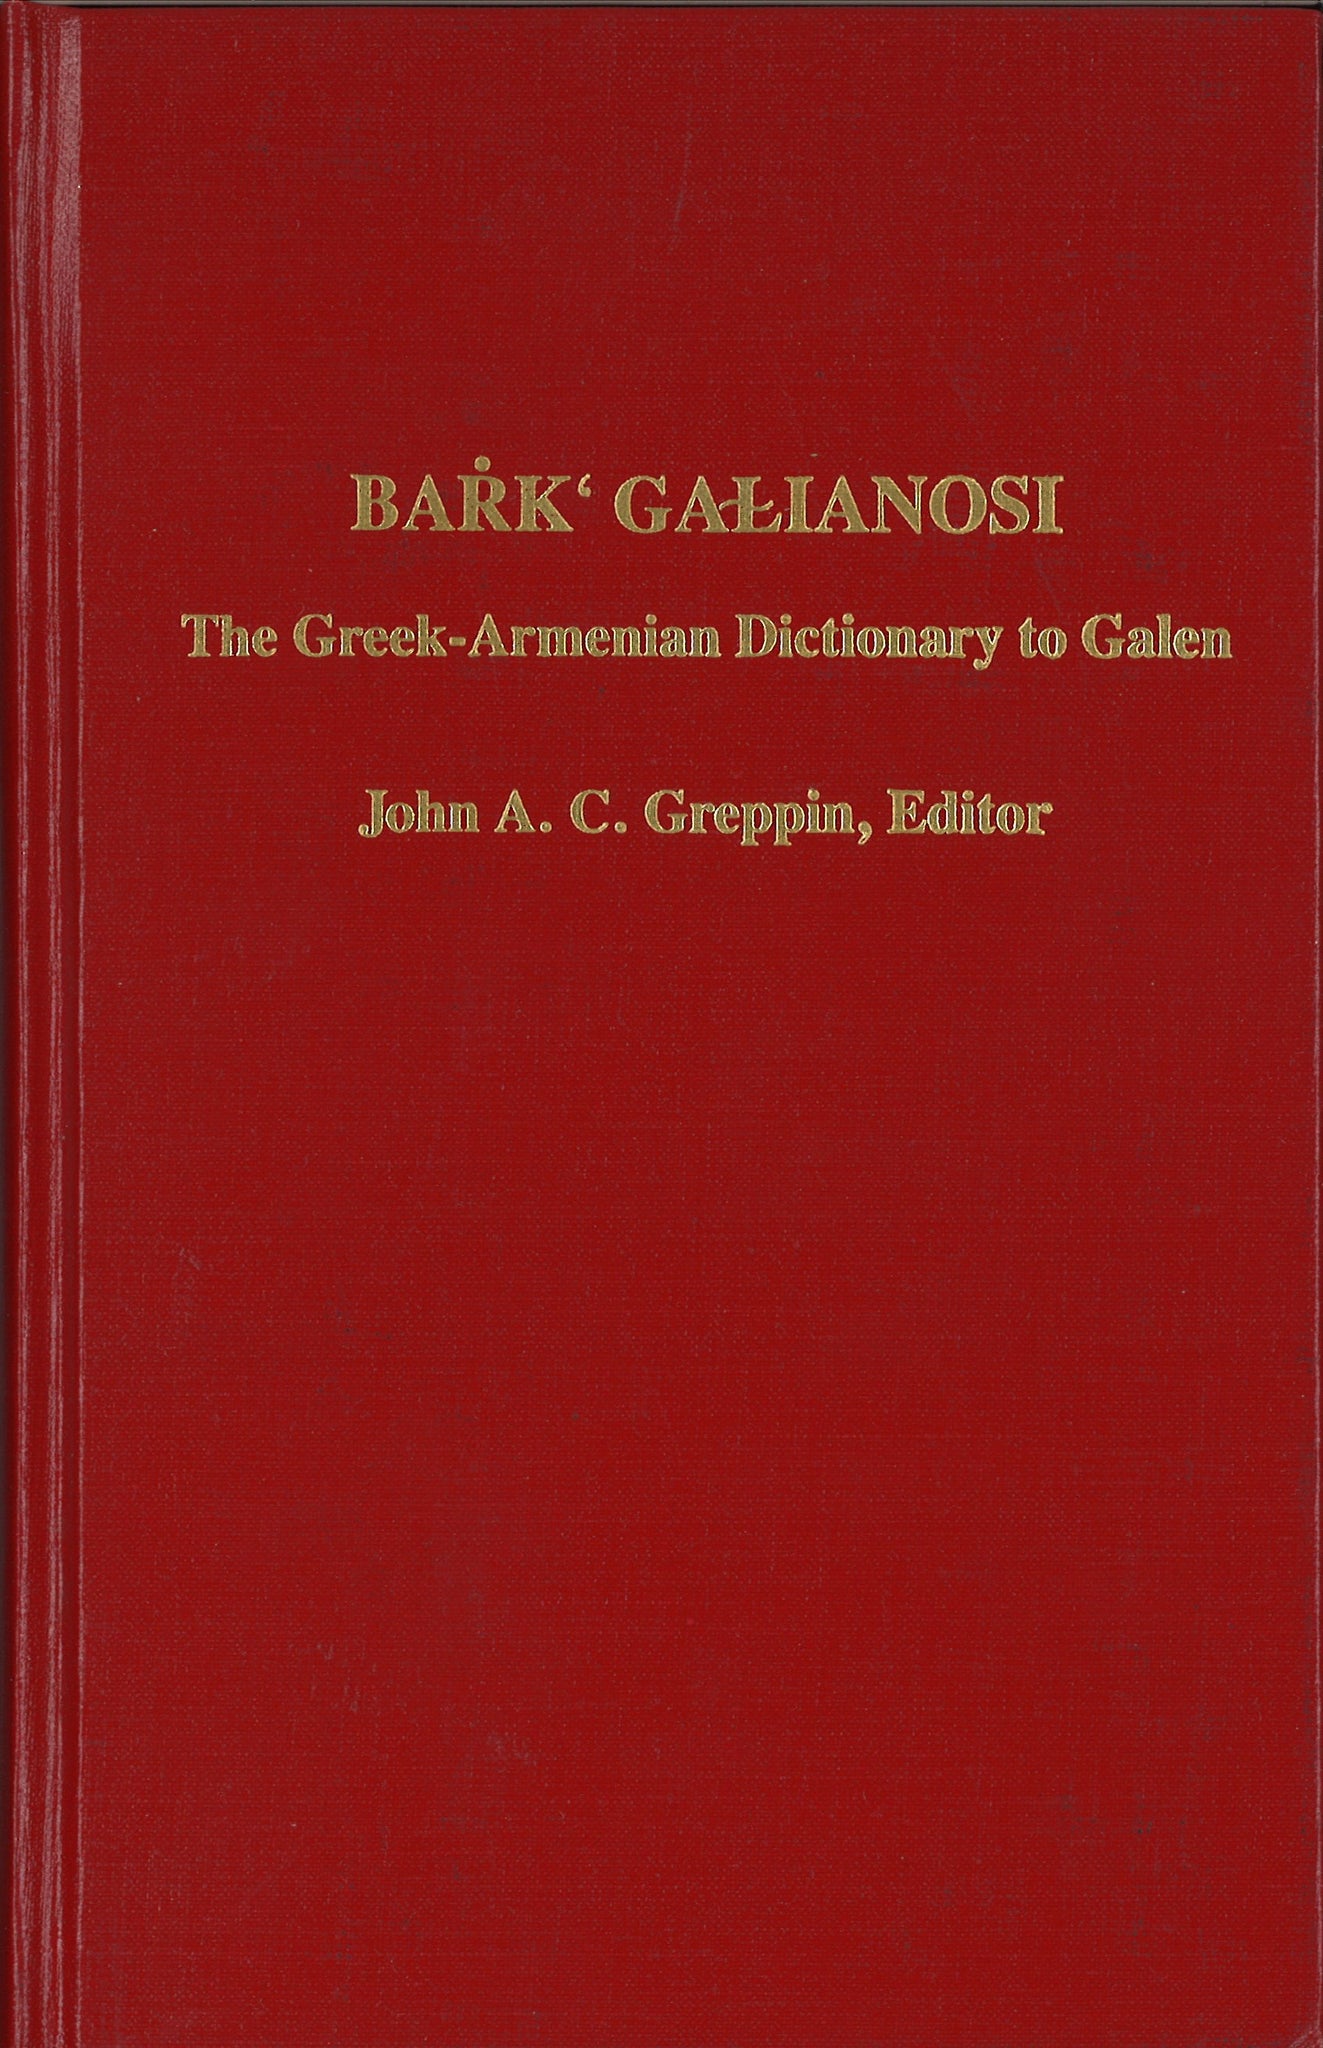 BARK GALIANOSI: The Greek-Armenian Dictionary to Galen